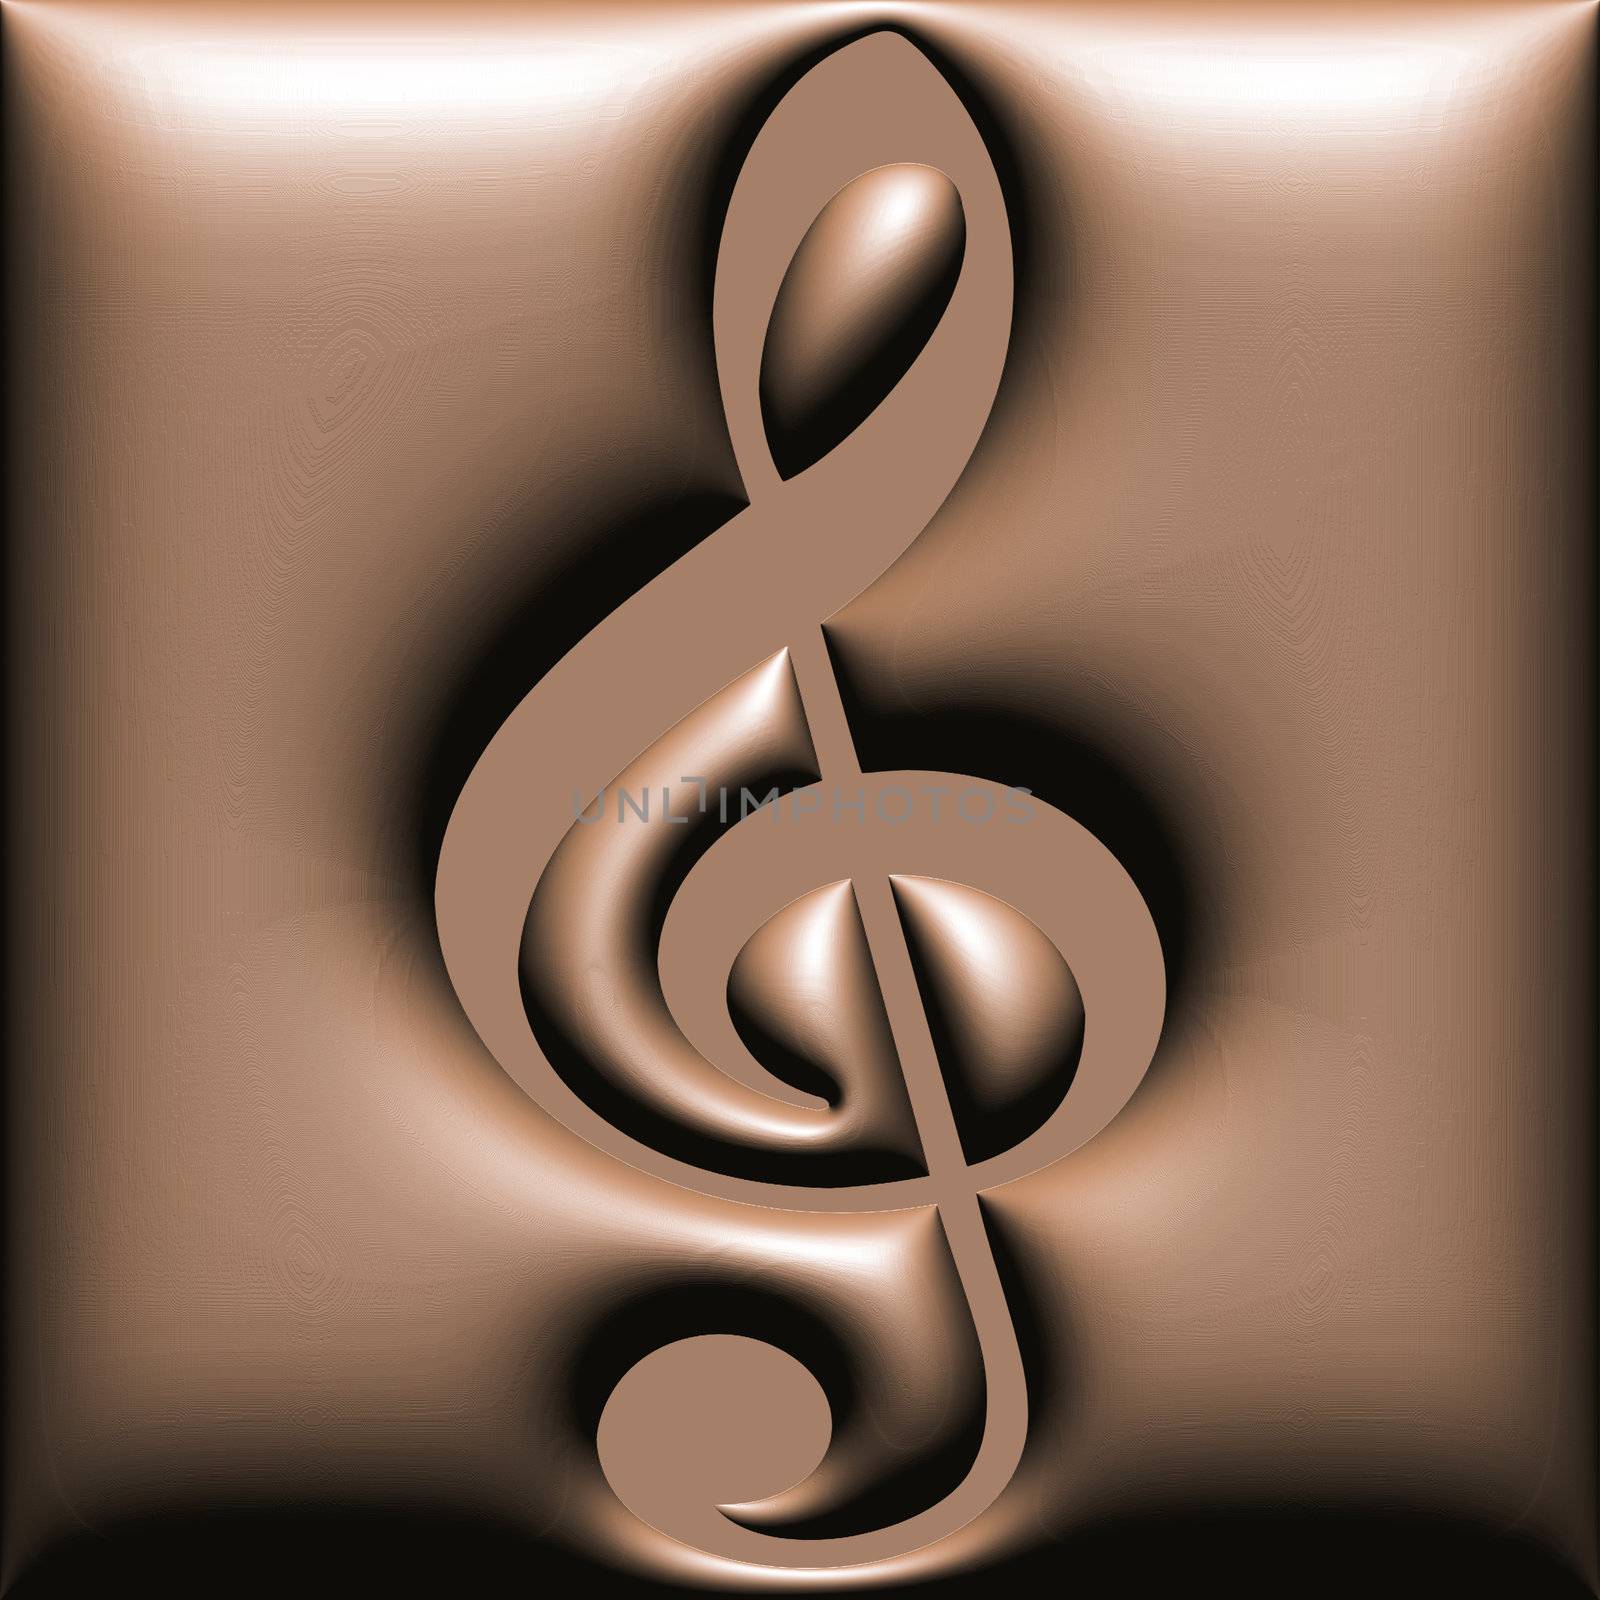 Chocolate treble clef 3d illustration